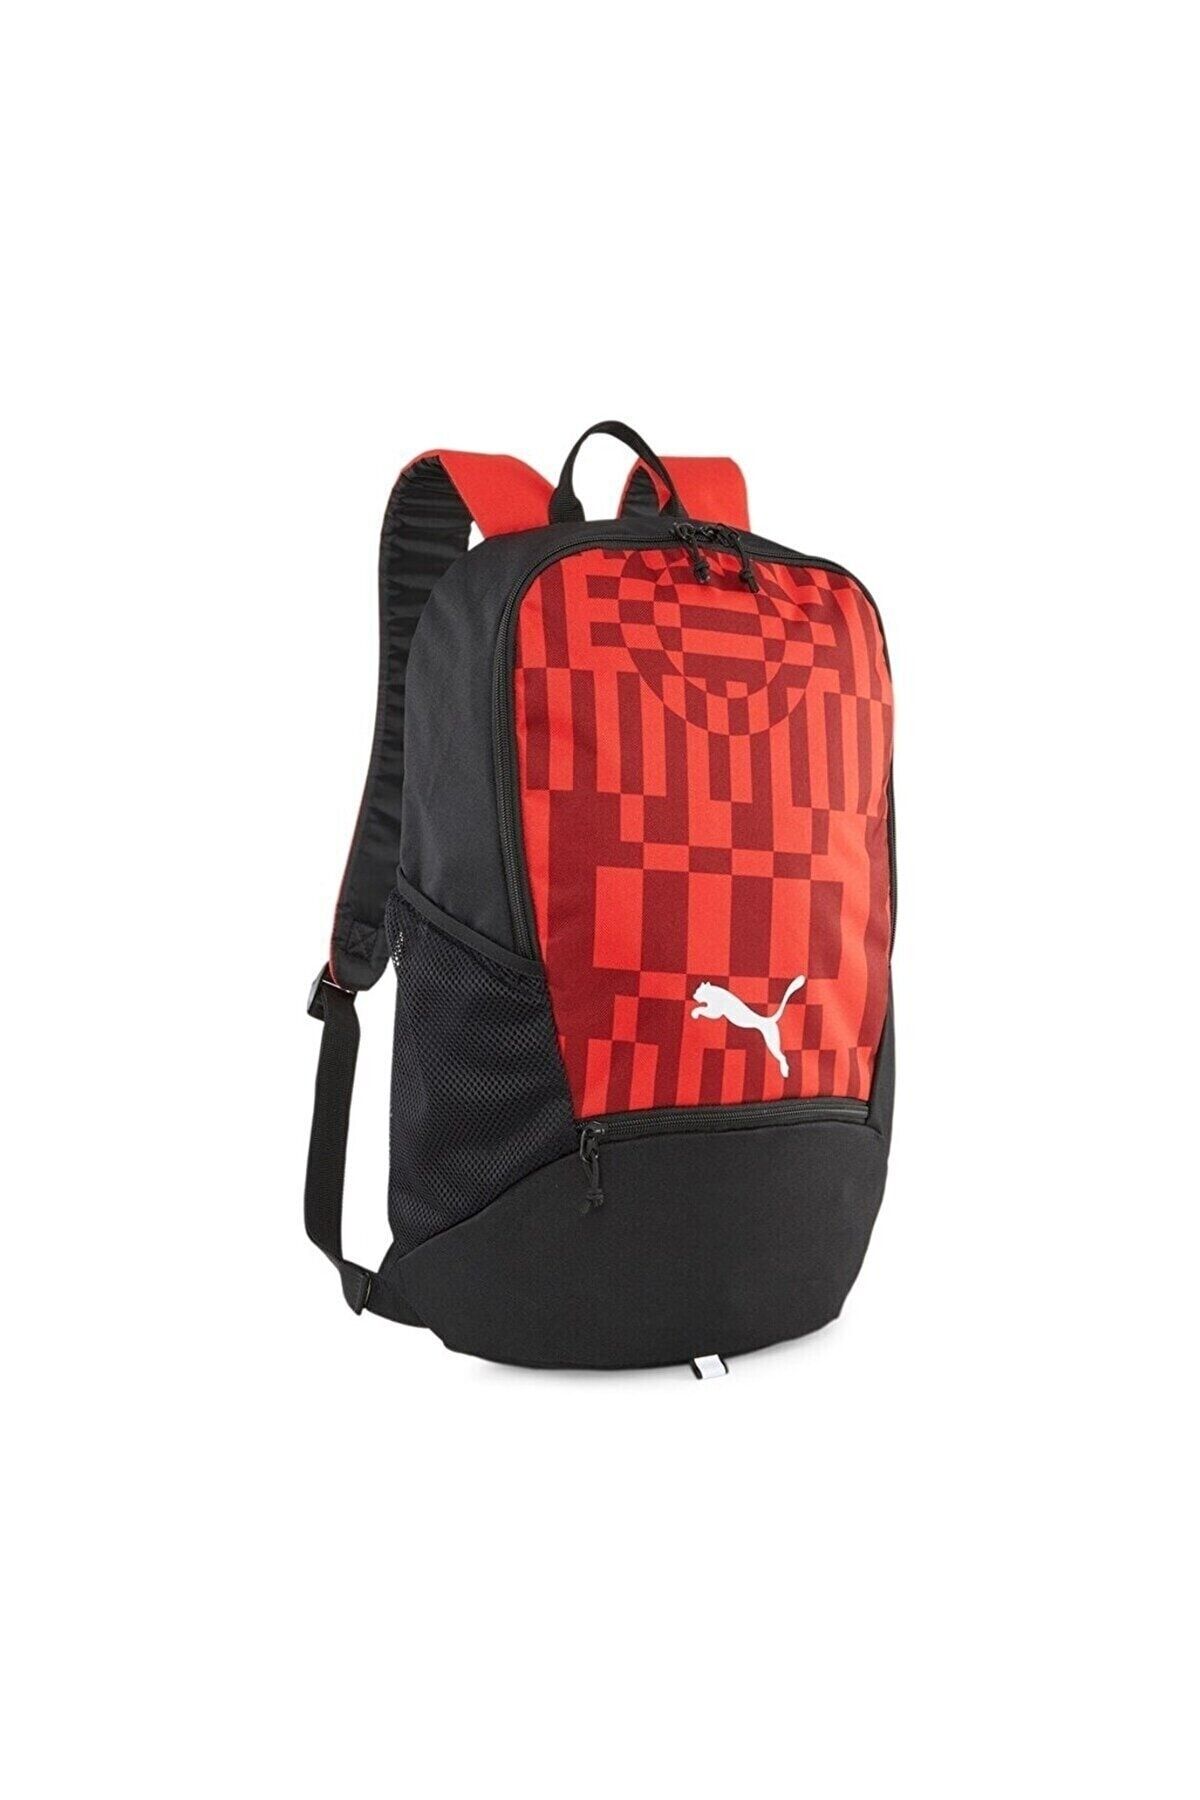 Puma 079911 01 individualRISE Backpack Black-Red Spor Sırt Çantası/SİYAH KIRMIZI